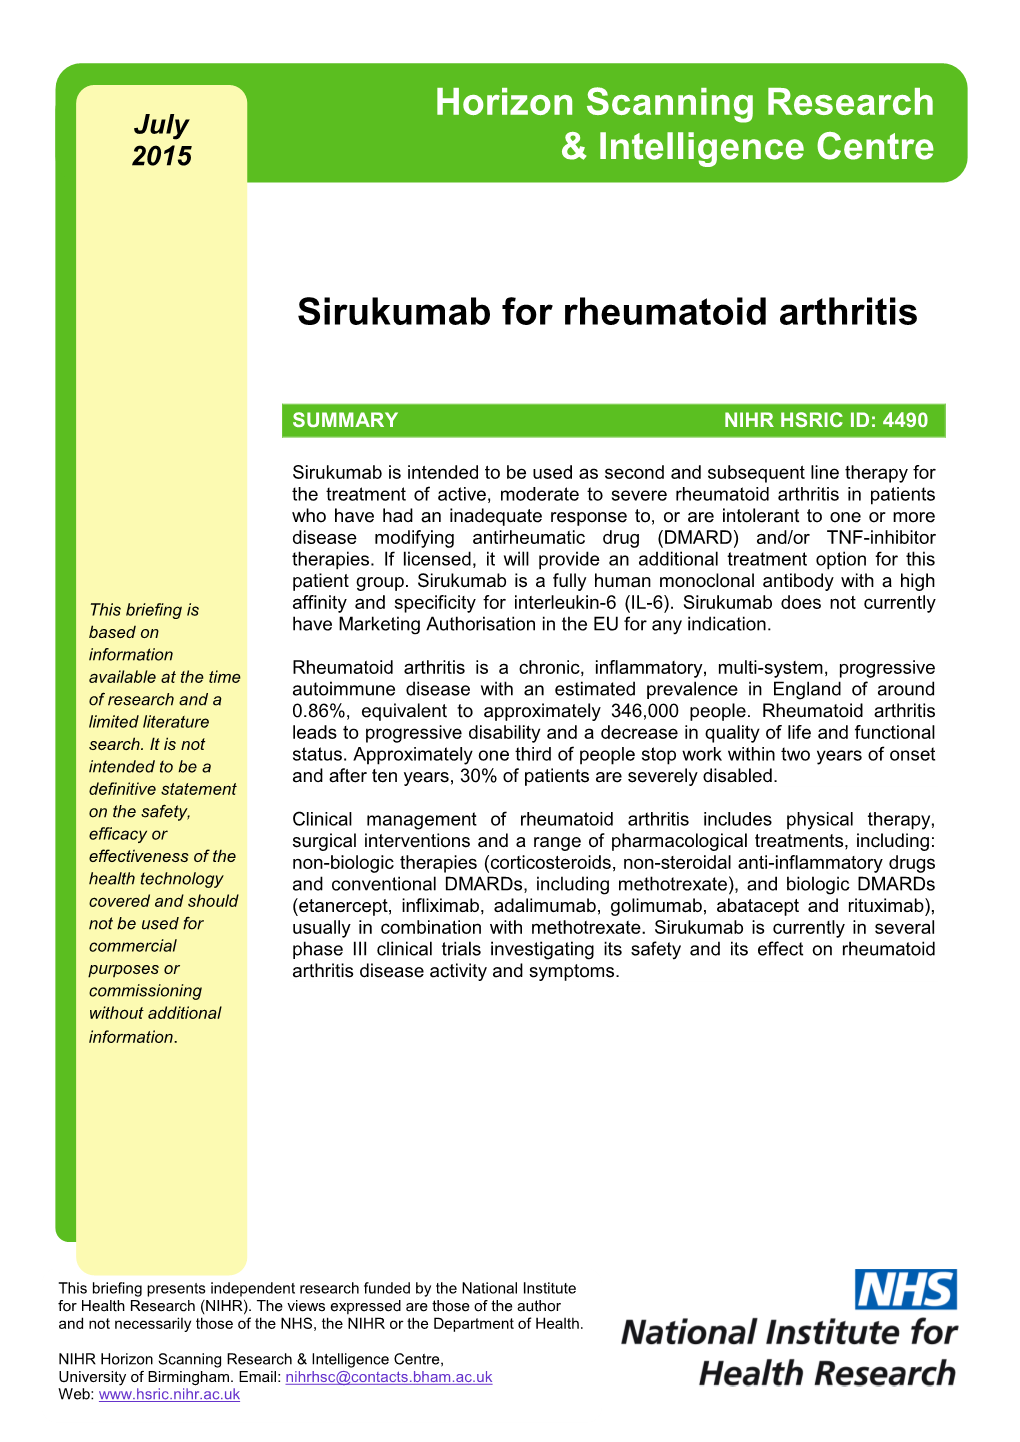 Sirukumab for Rheumatoid Arthritis